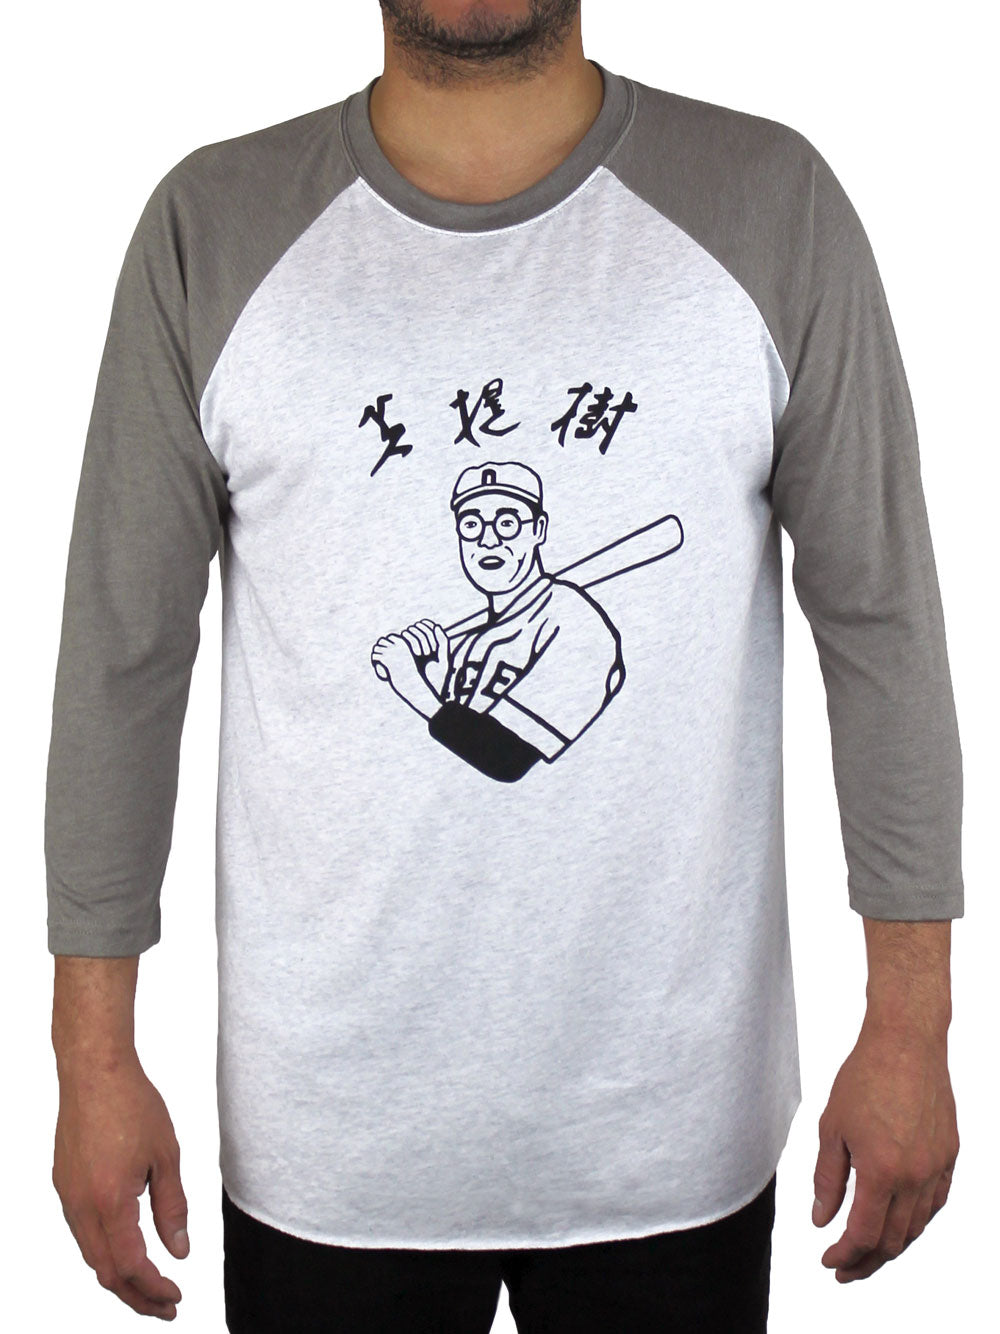 Kaoru Betto Baseball Shirt Front View